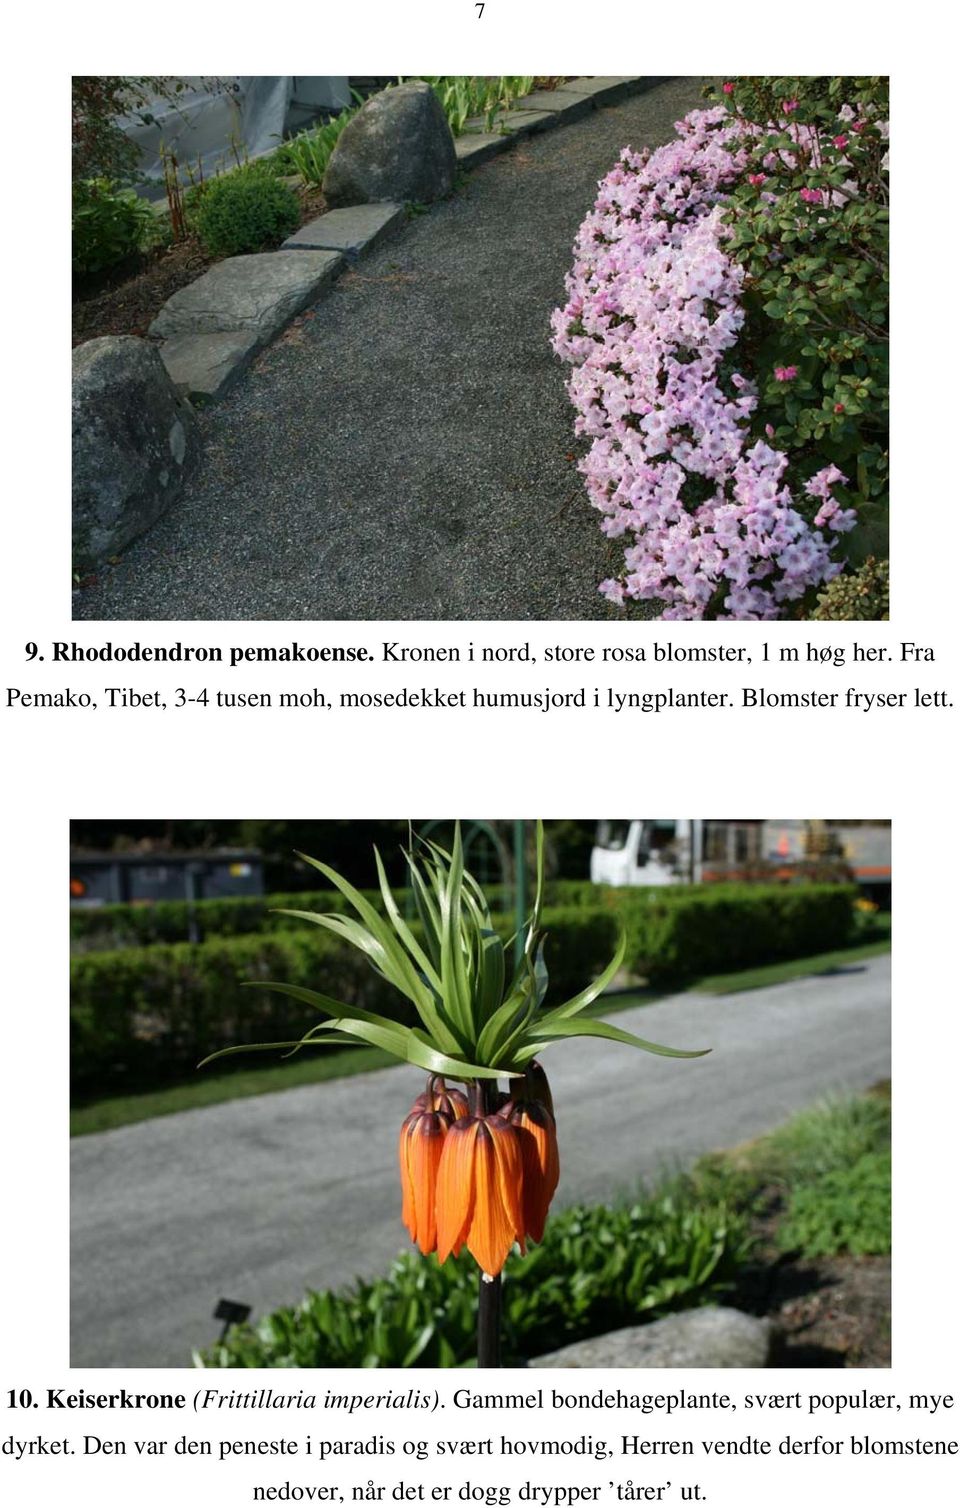 Keiserkrone (Frittillaria imperialis). Gammel bondehageplante, svært populær, mye dyrket.